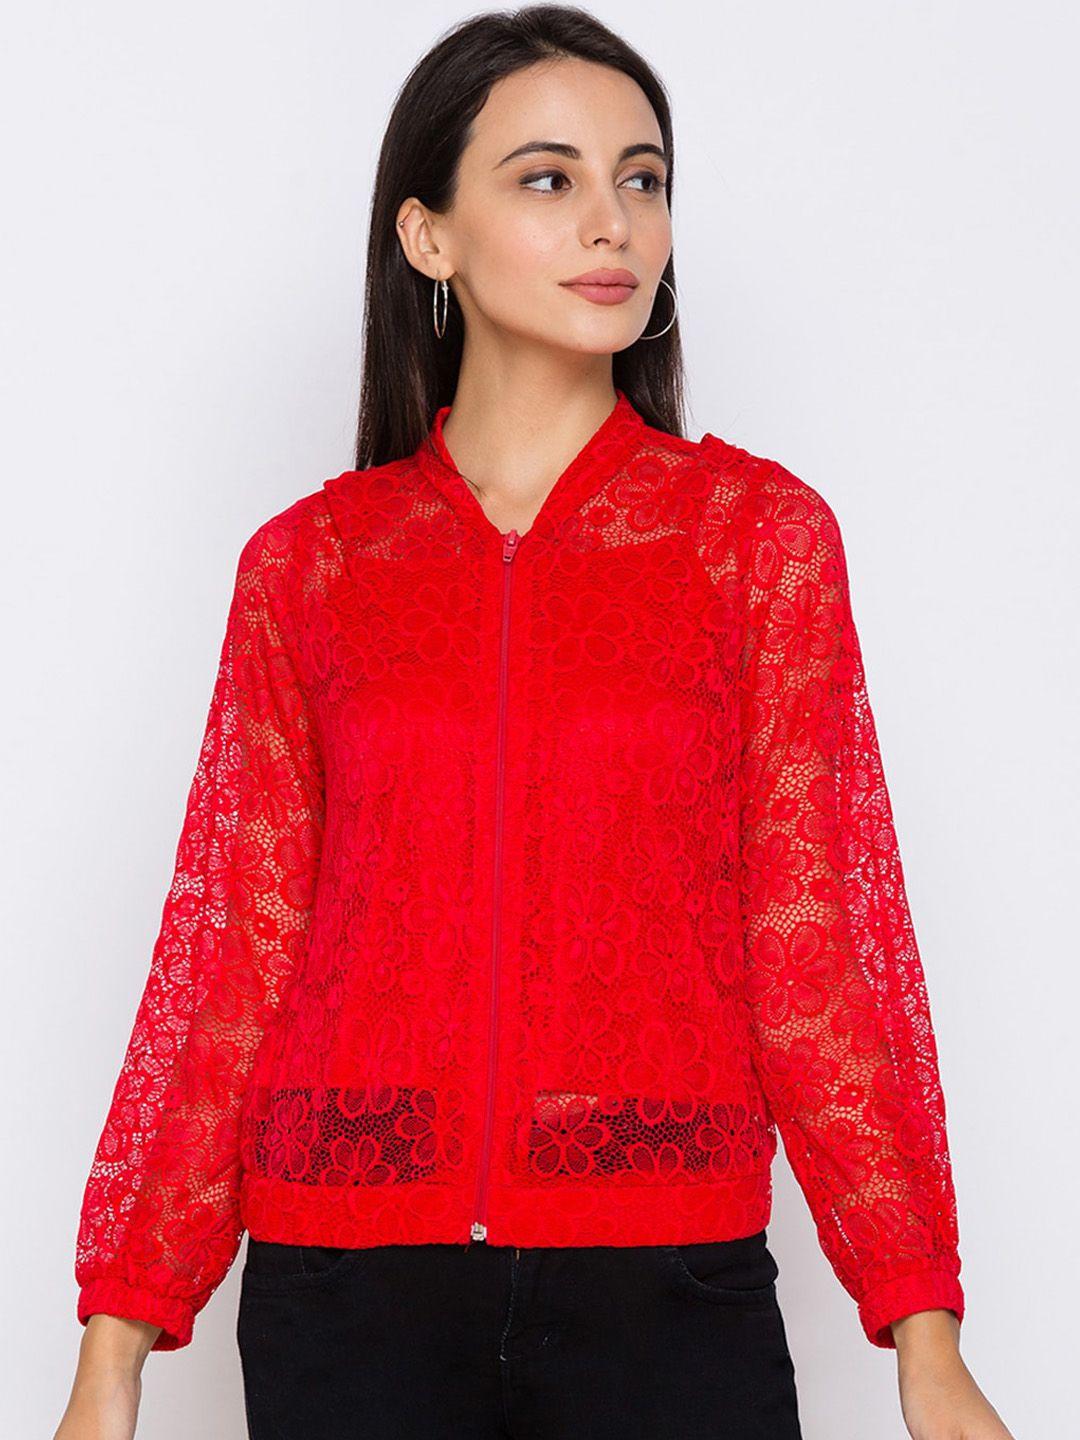 globus-women-red-tailored-jacket